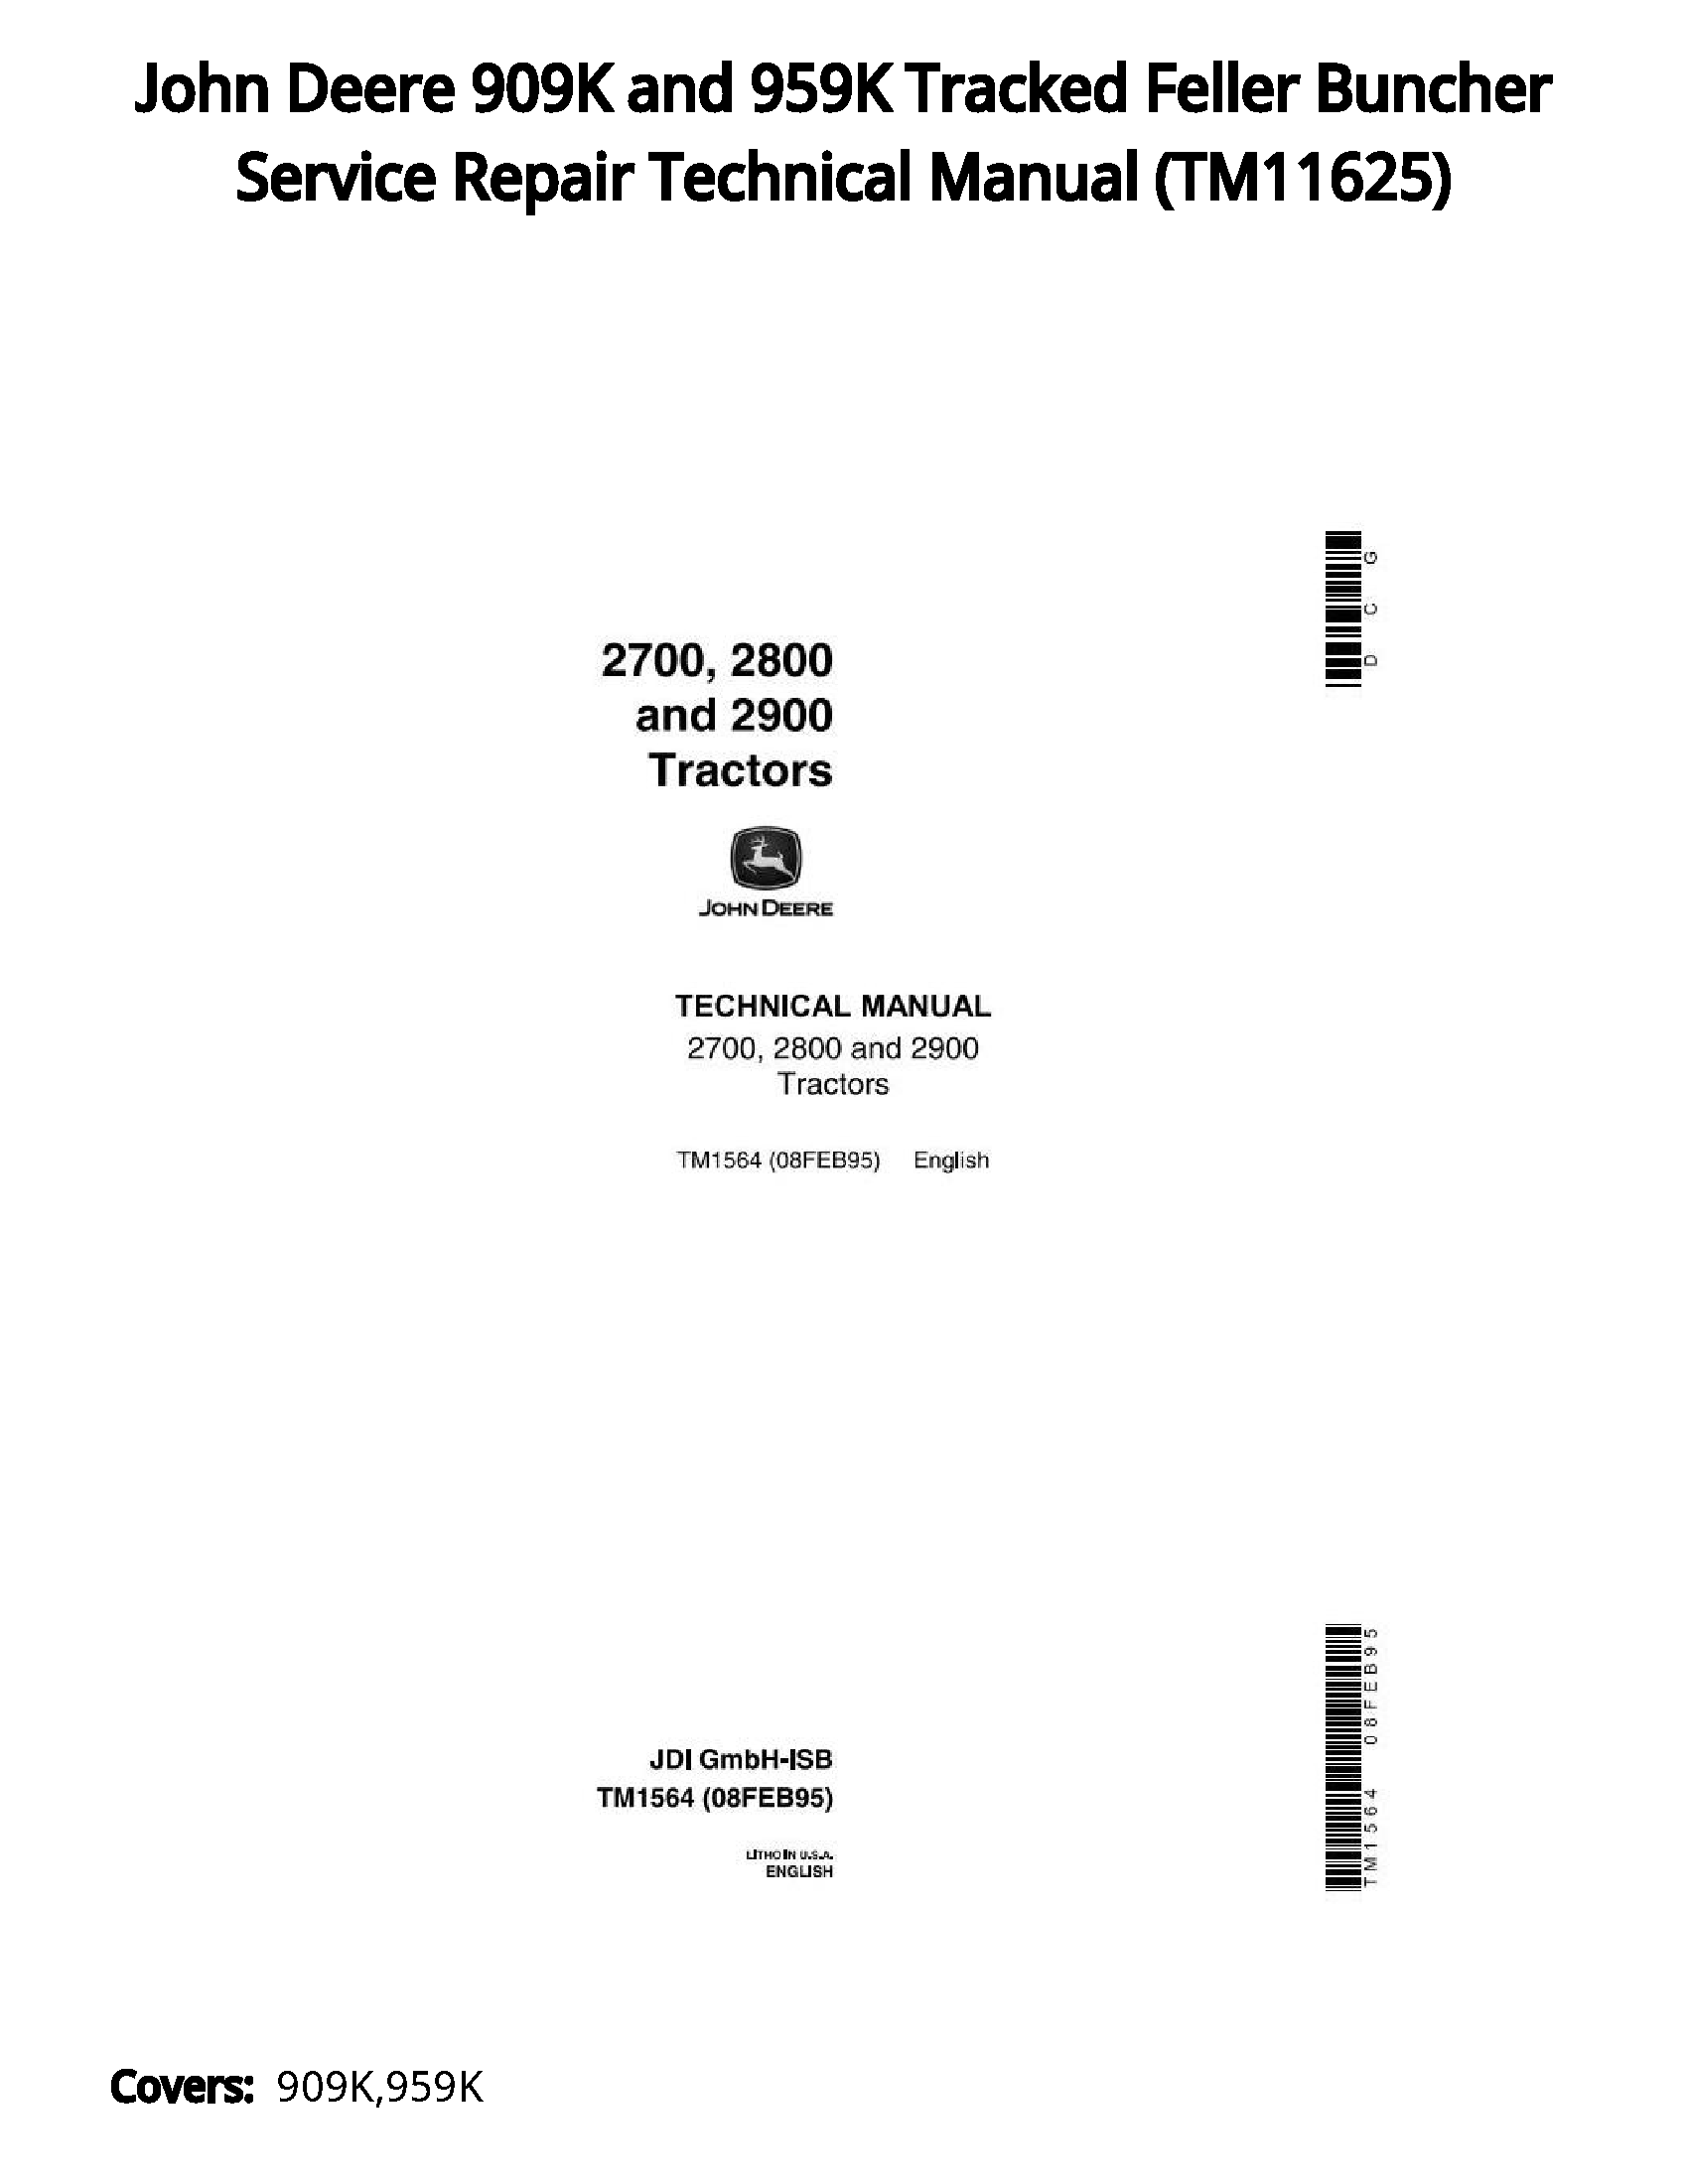 John Deere 909K and 959K Tracked Feller Buncher Service Repair Technical Manual - TM11625